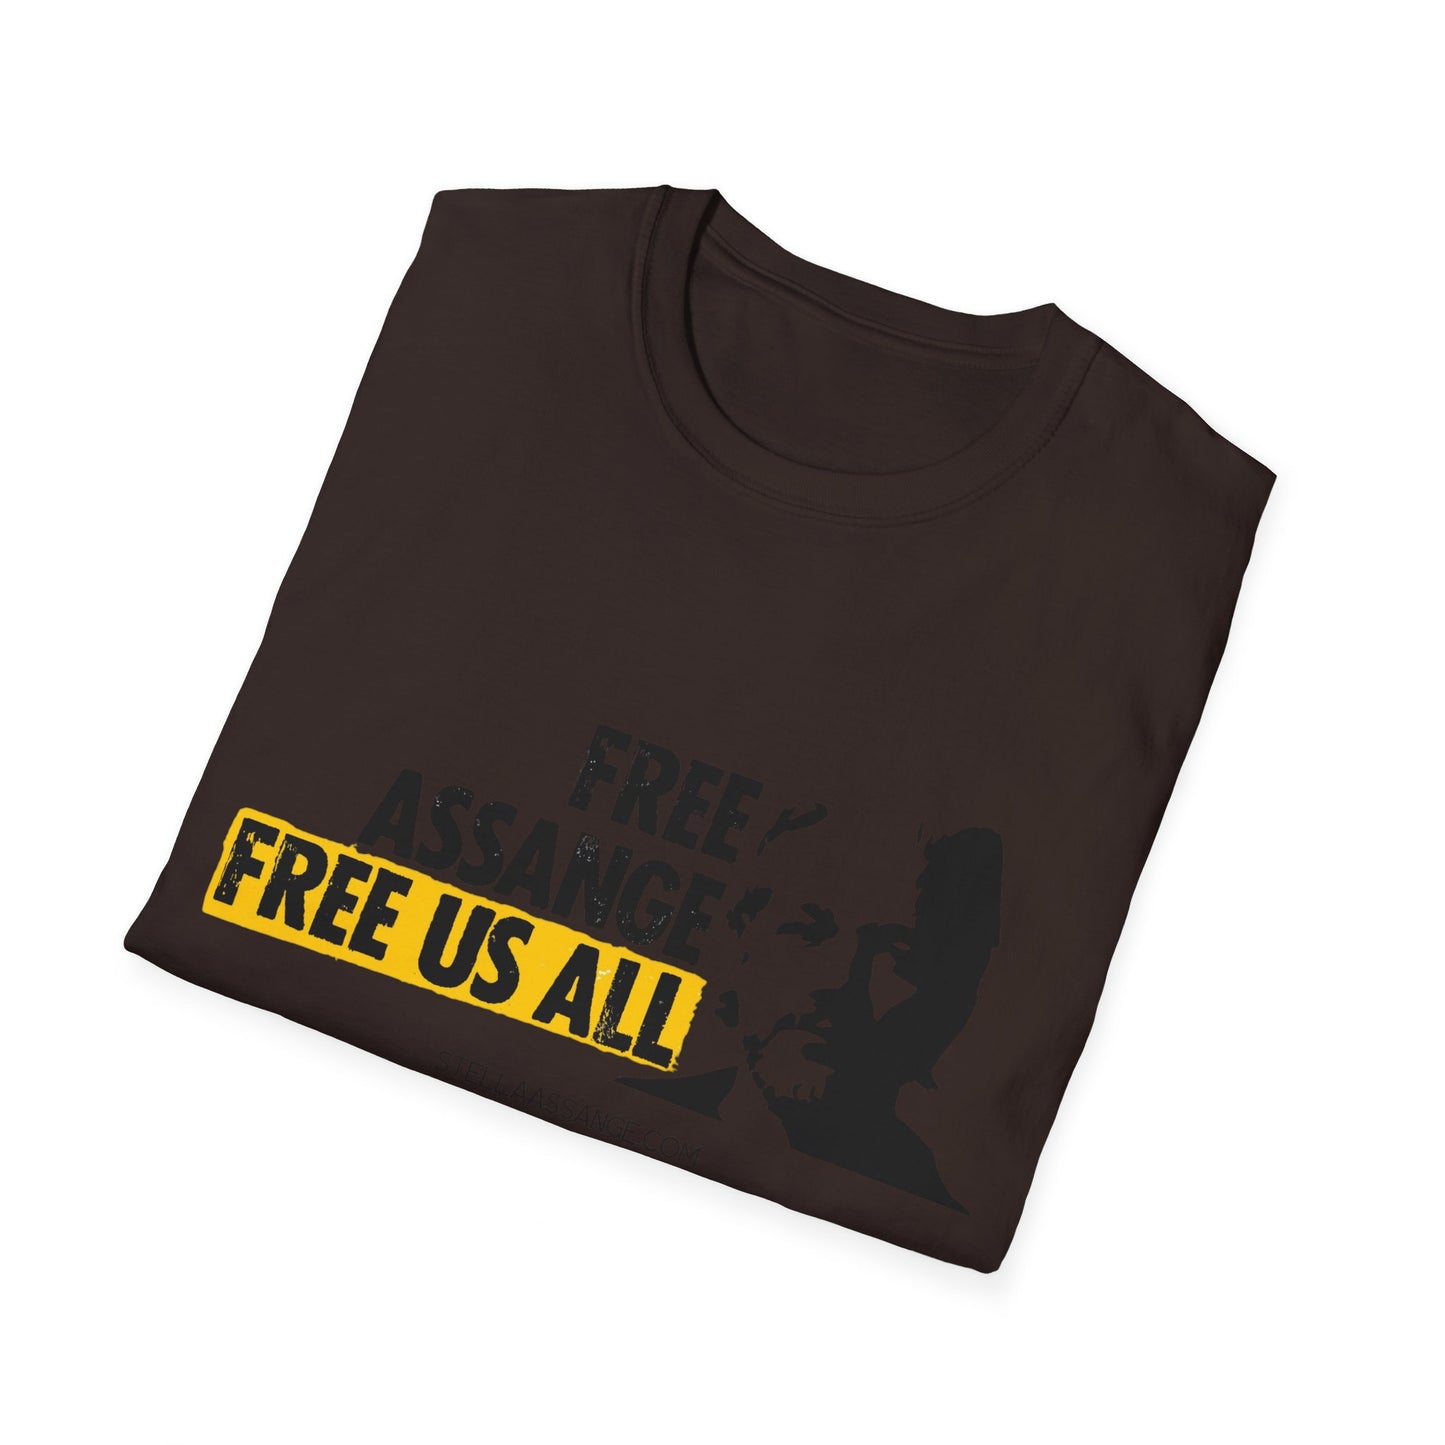 (US) "Free Assange, Free Us All" Unisex Softstyle T-Shirt